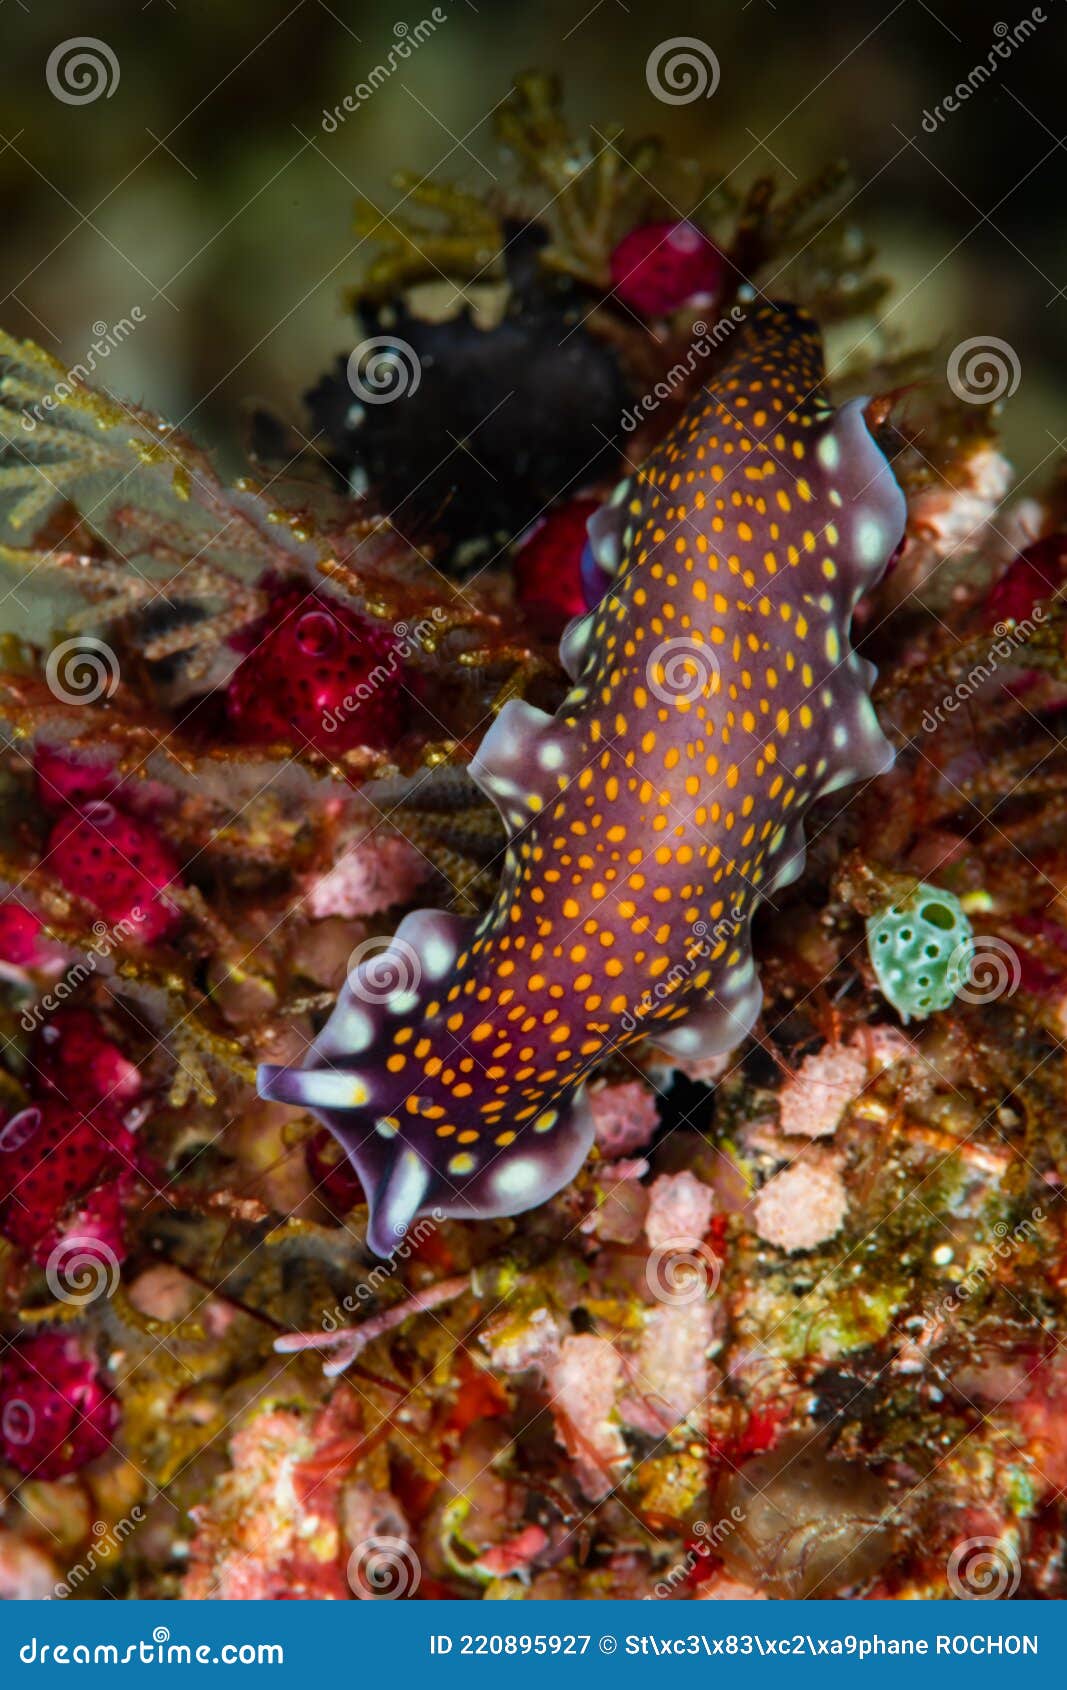 linda's flatworm on a reef